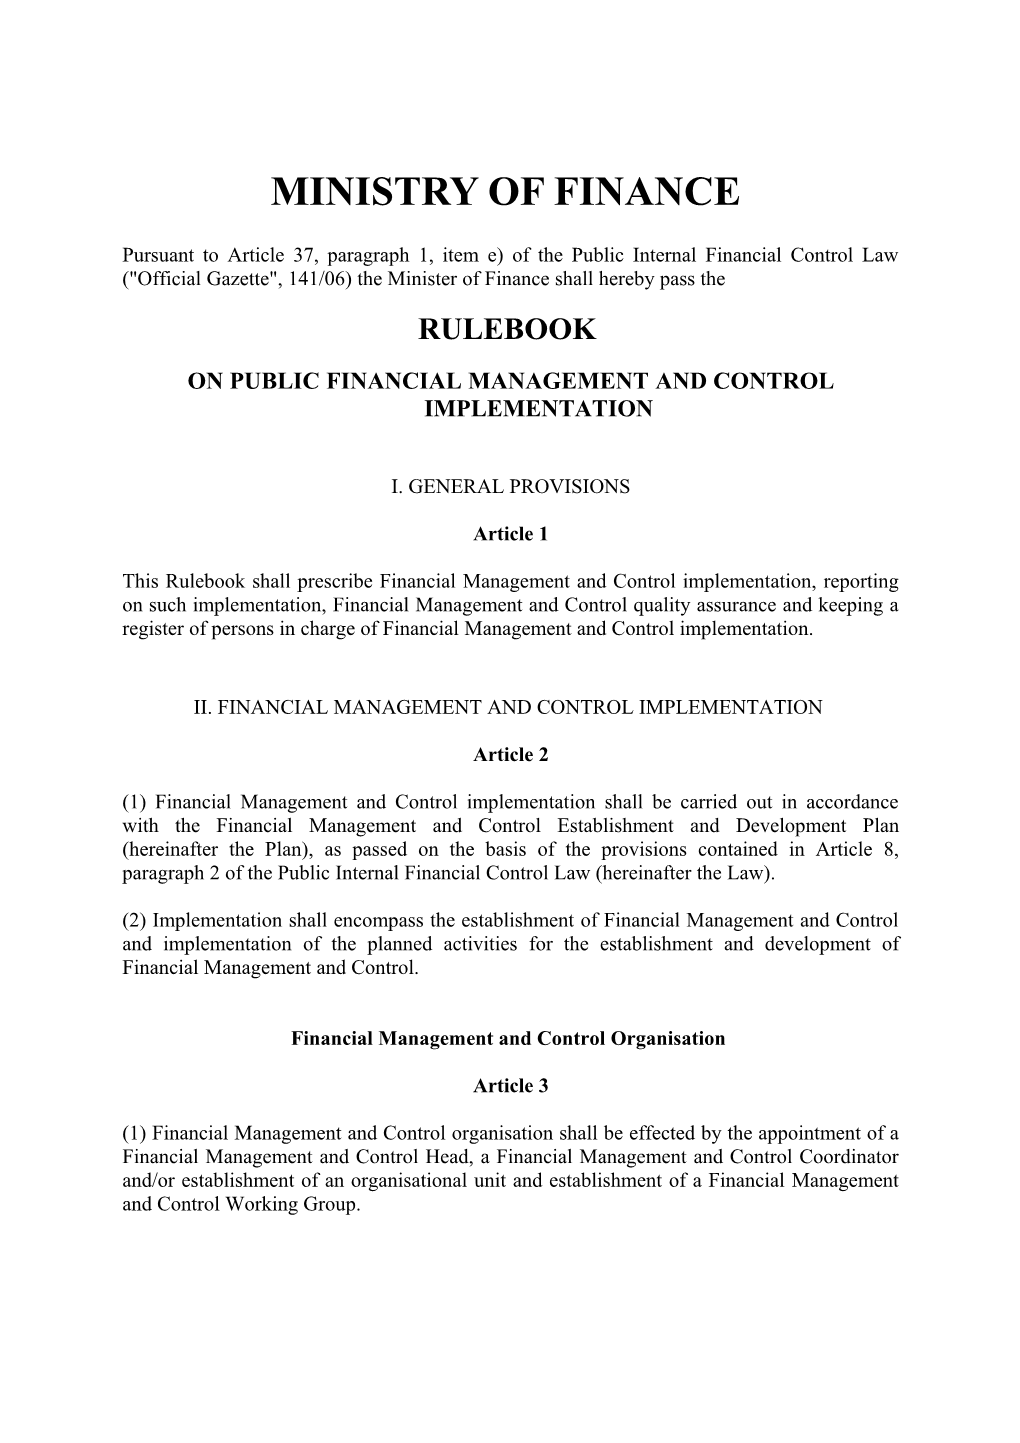 Pravilnik O Financijskom Upravljanju I Kontroli